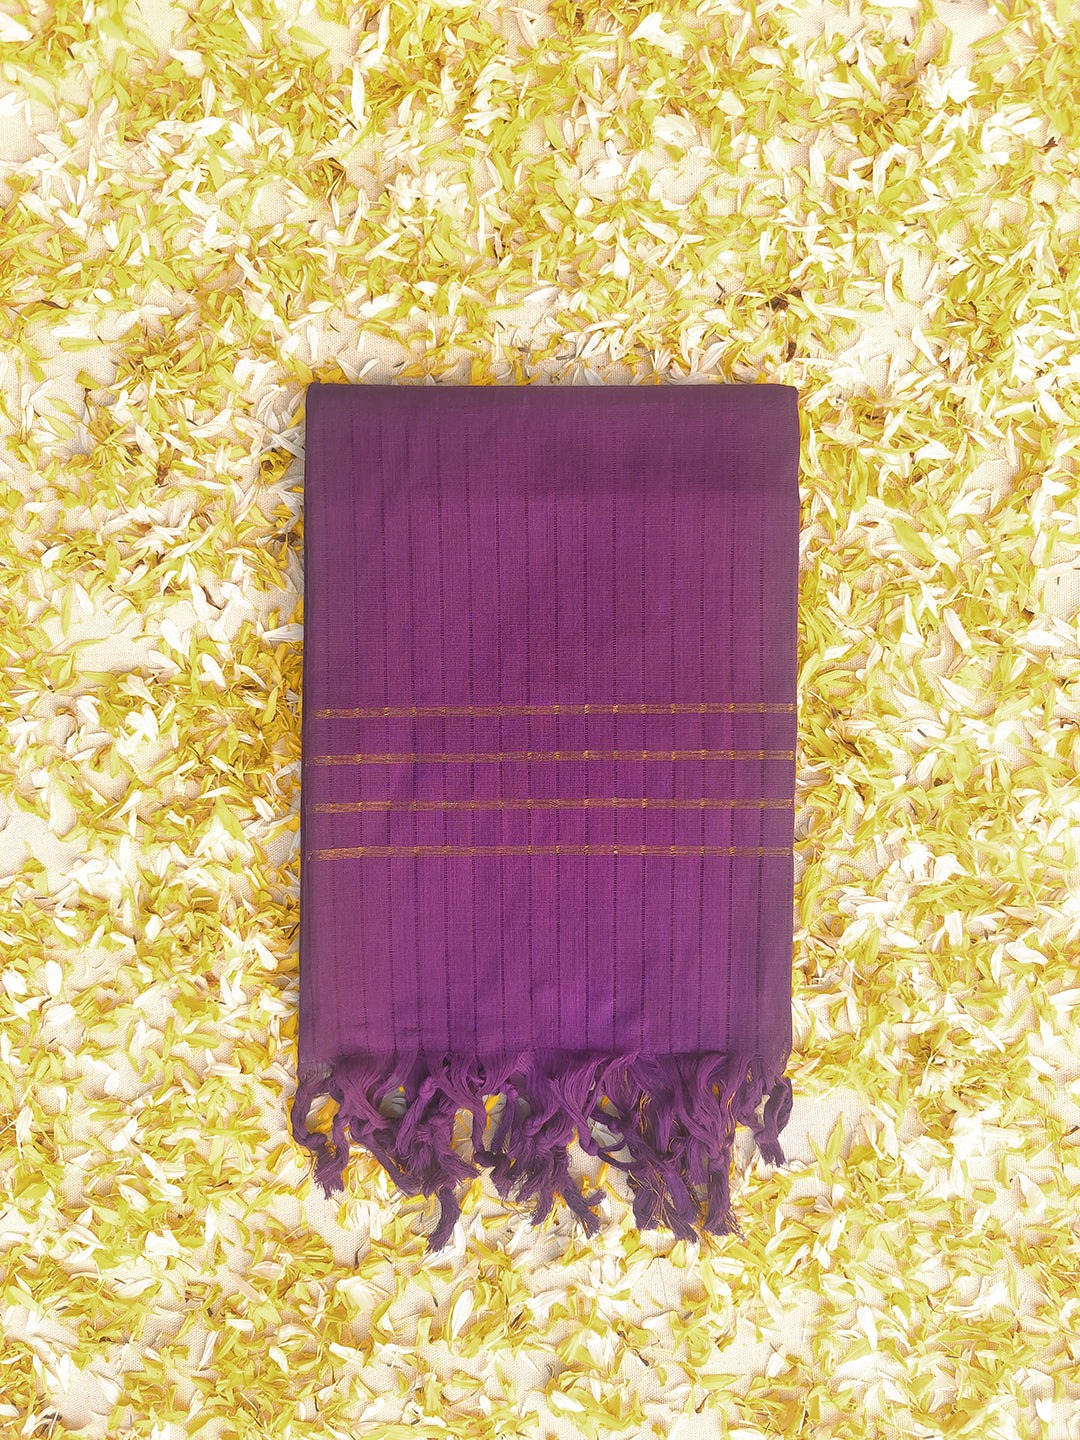 Jyeshtha Odhani - Royal Purple